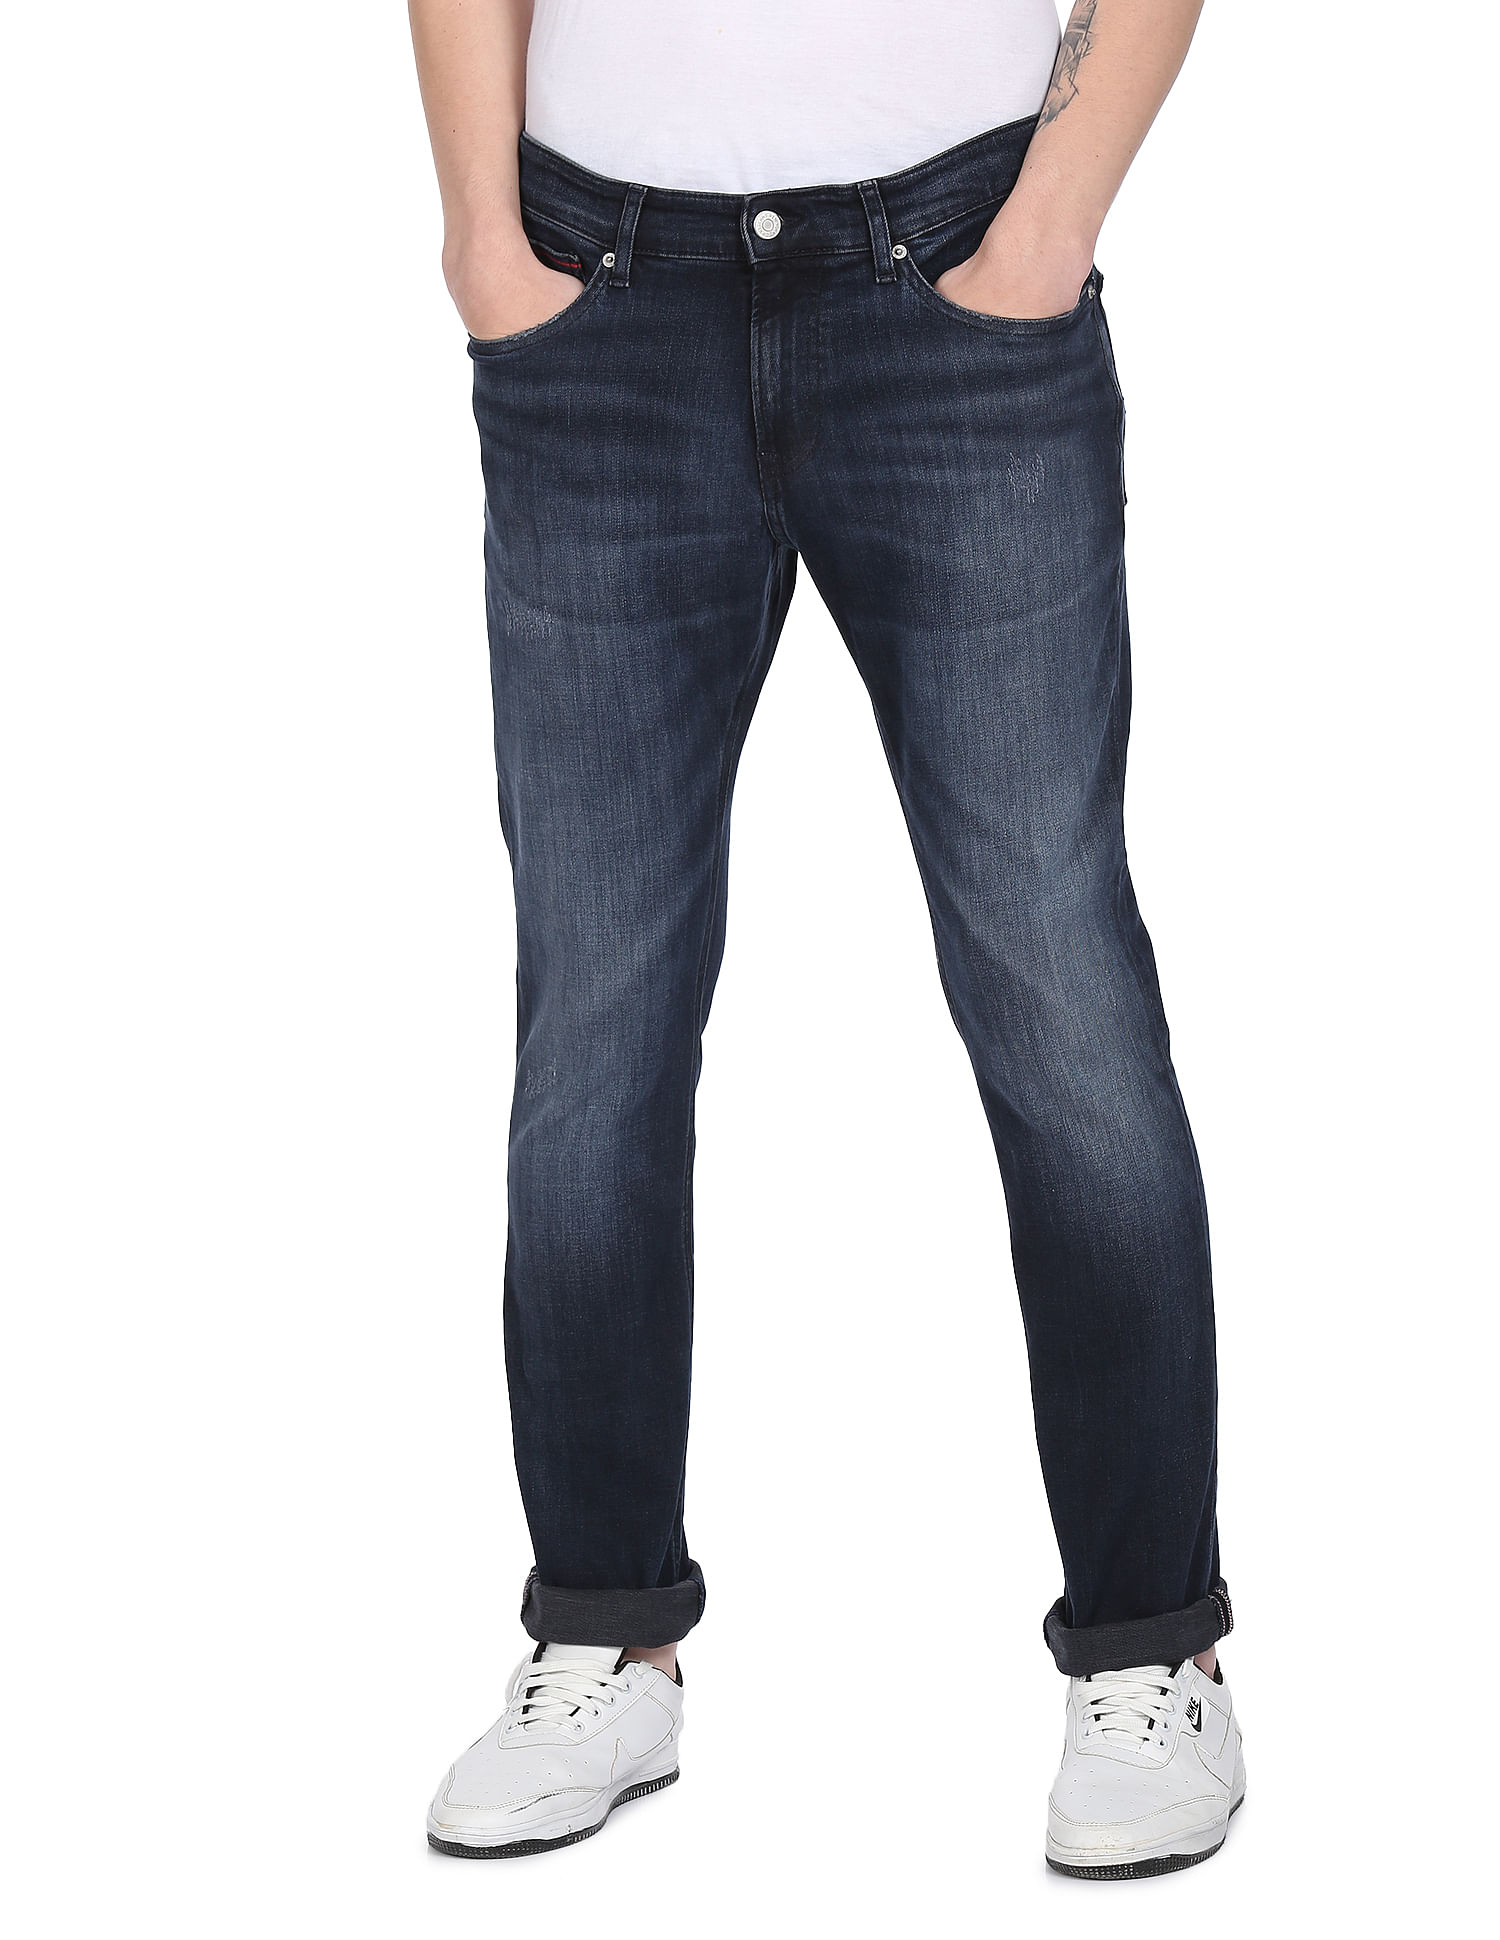 Omleiden Per ongeluk Cerebrum Buy Tommy Hilfiger Men Blue Scanton Slim Fit Stone Wash Jeans - NNNOW.com